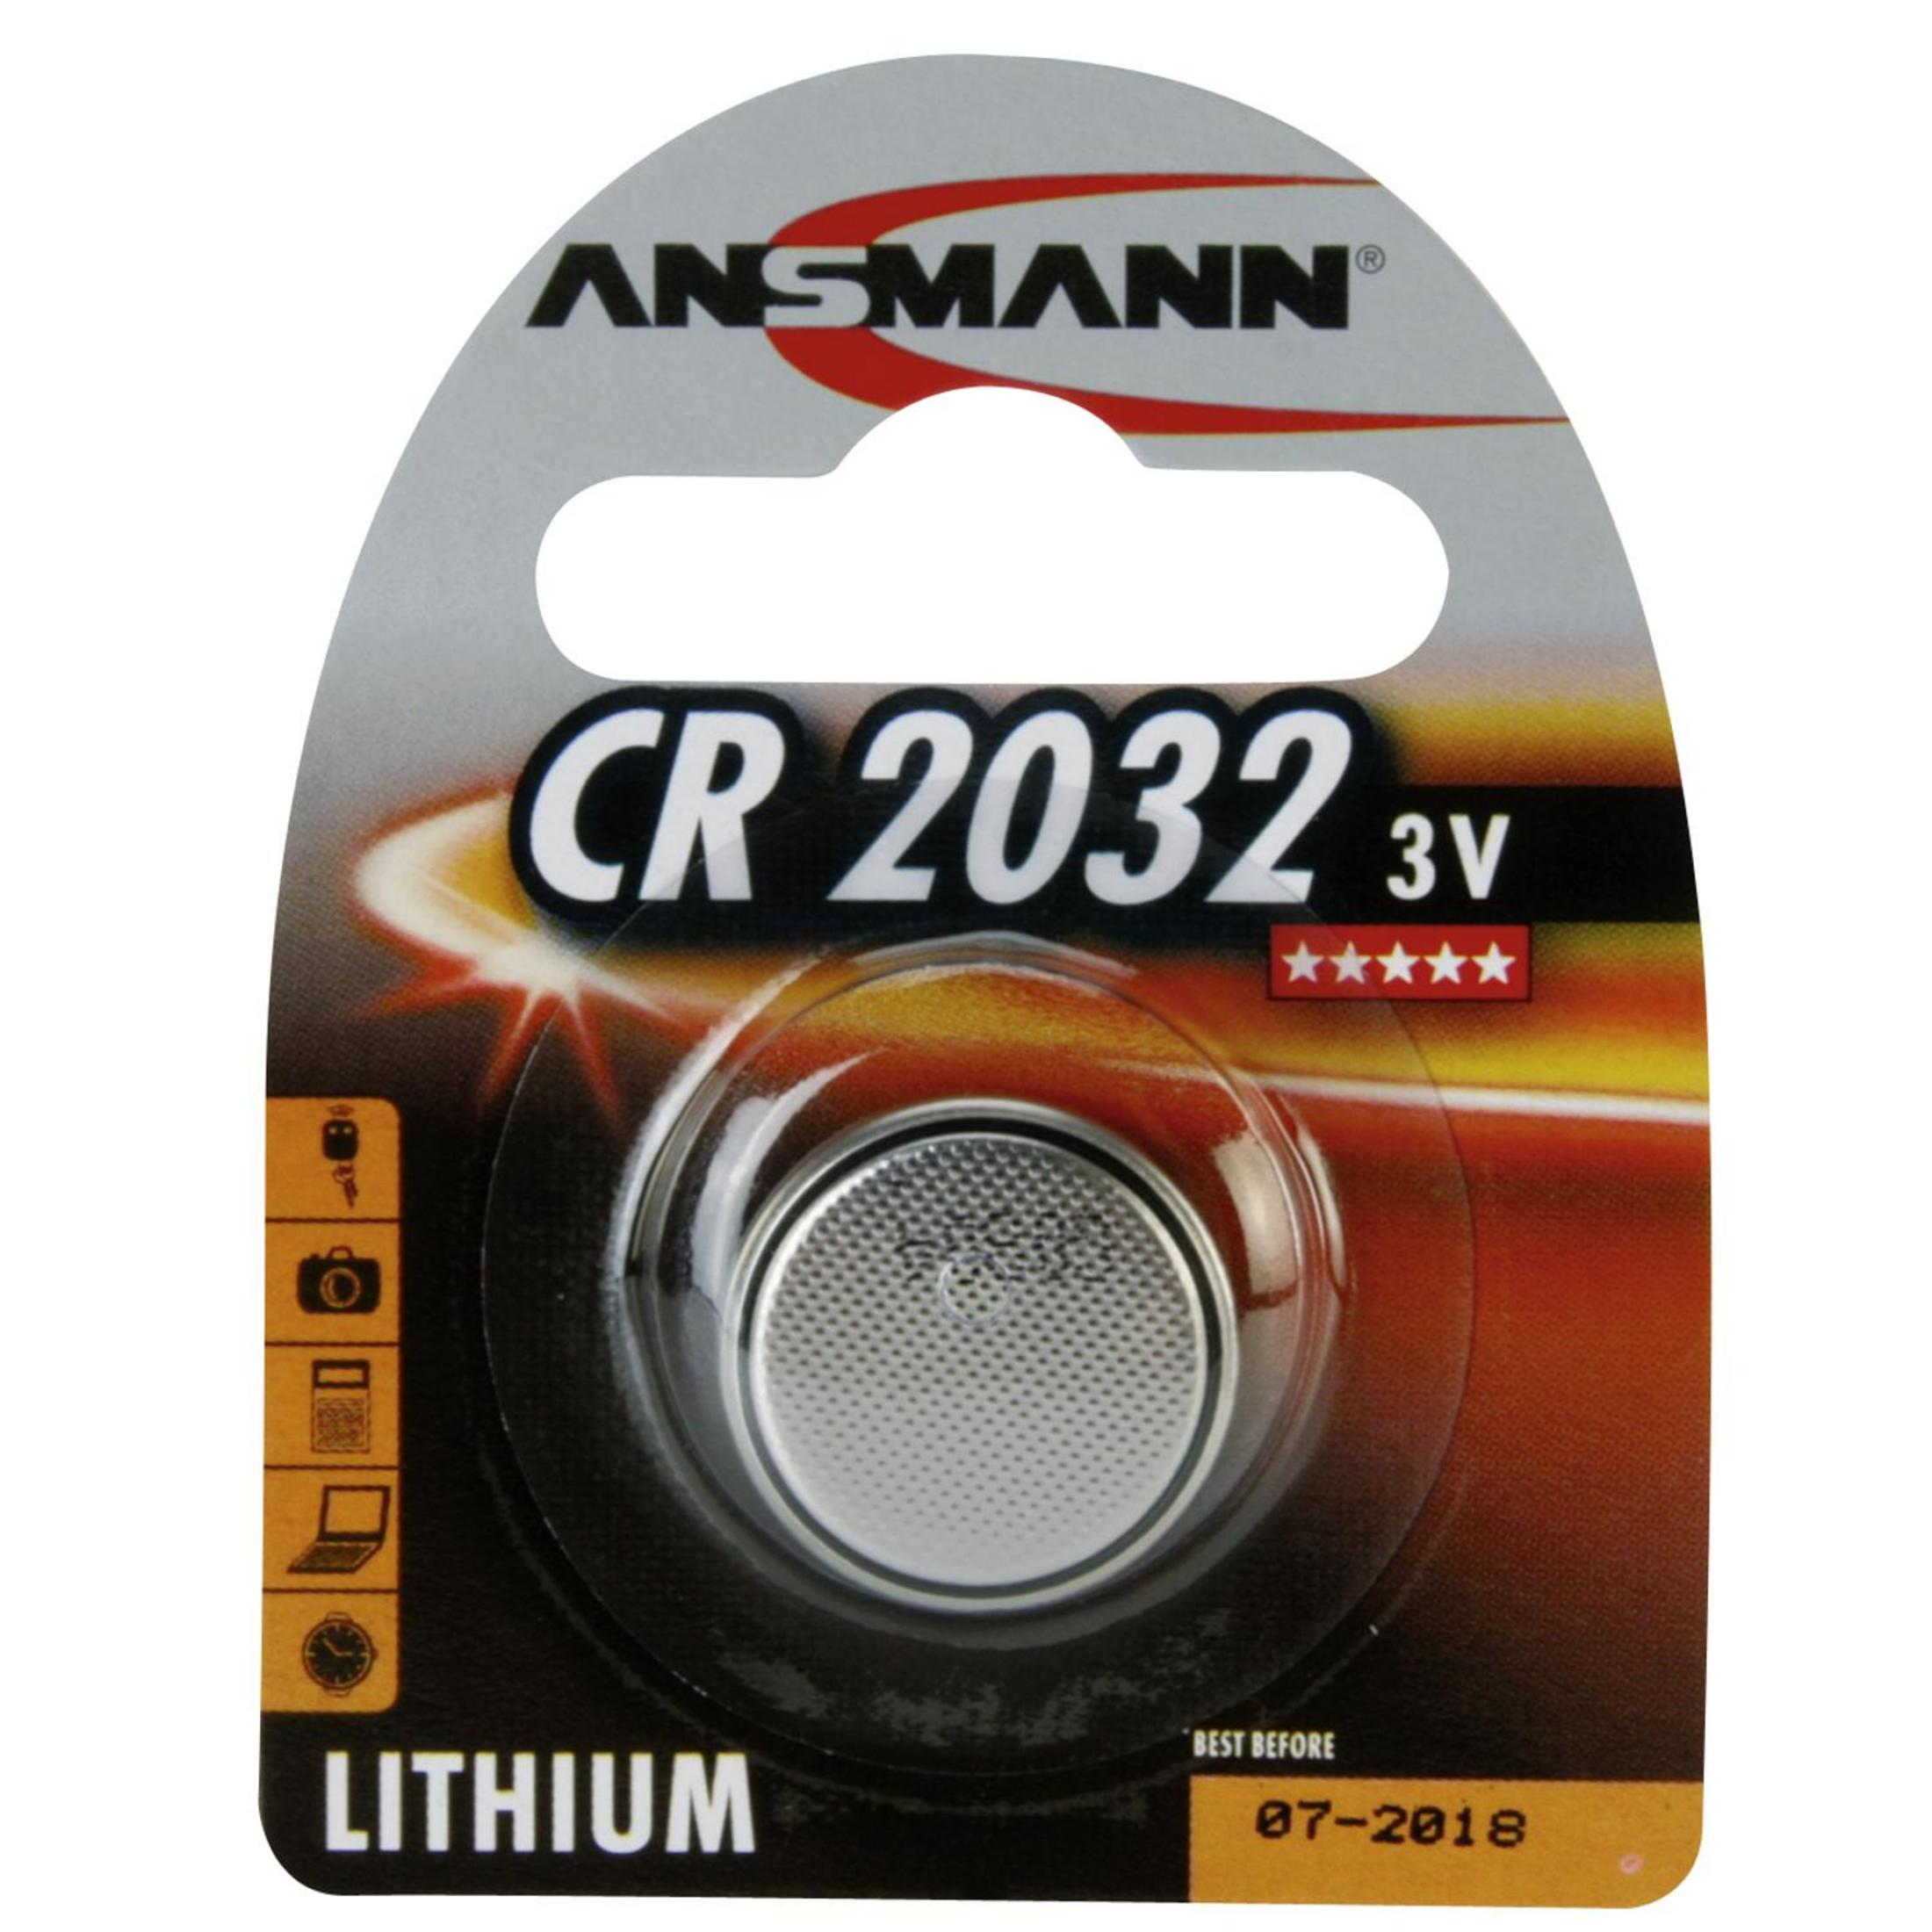 Stück Mainboardbatterie 3V 1 / Lithium 240 5020122 CR2032 Knopfzellen, 3 Knopfzelle Strom Lithium, Volt, ANSMANN ANSMANN mAh Knopfzellen